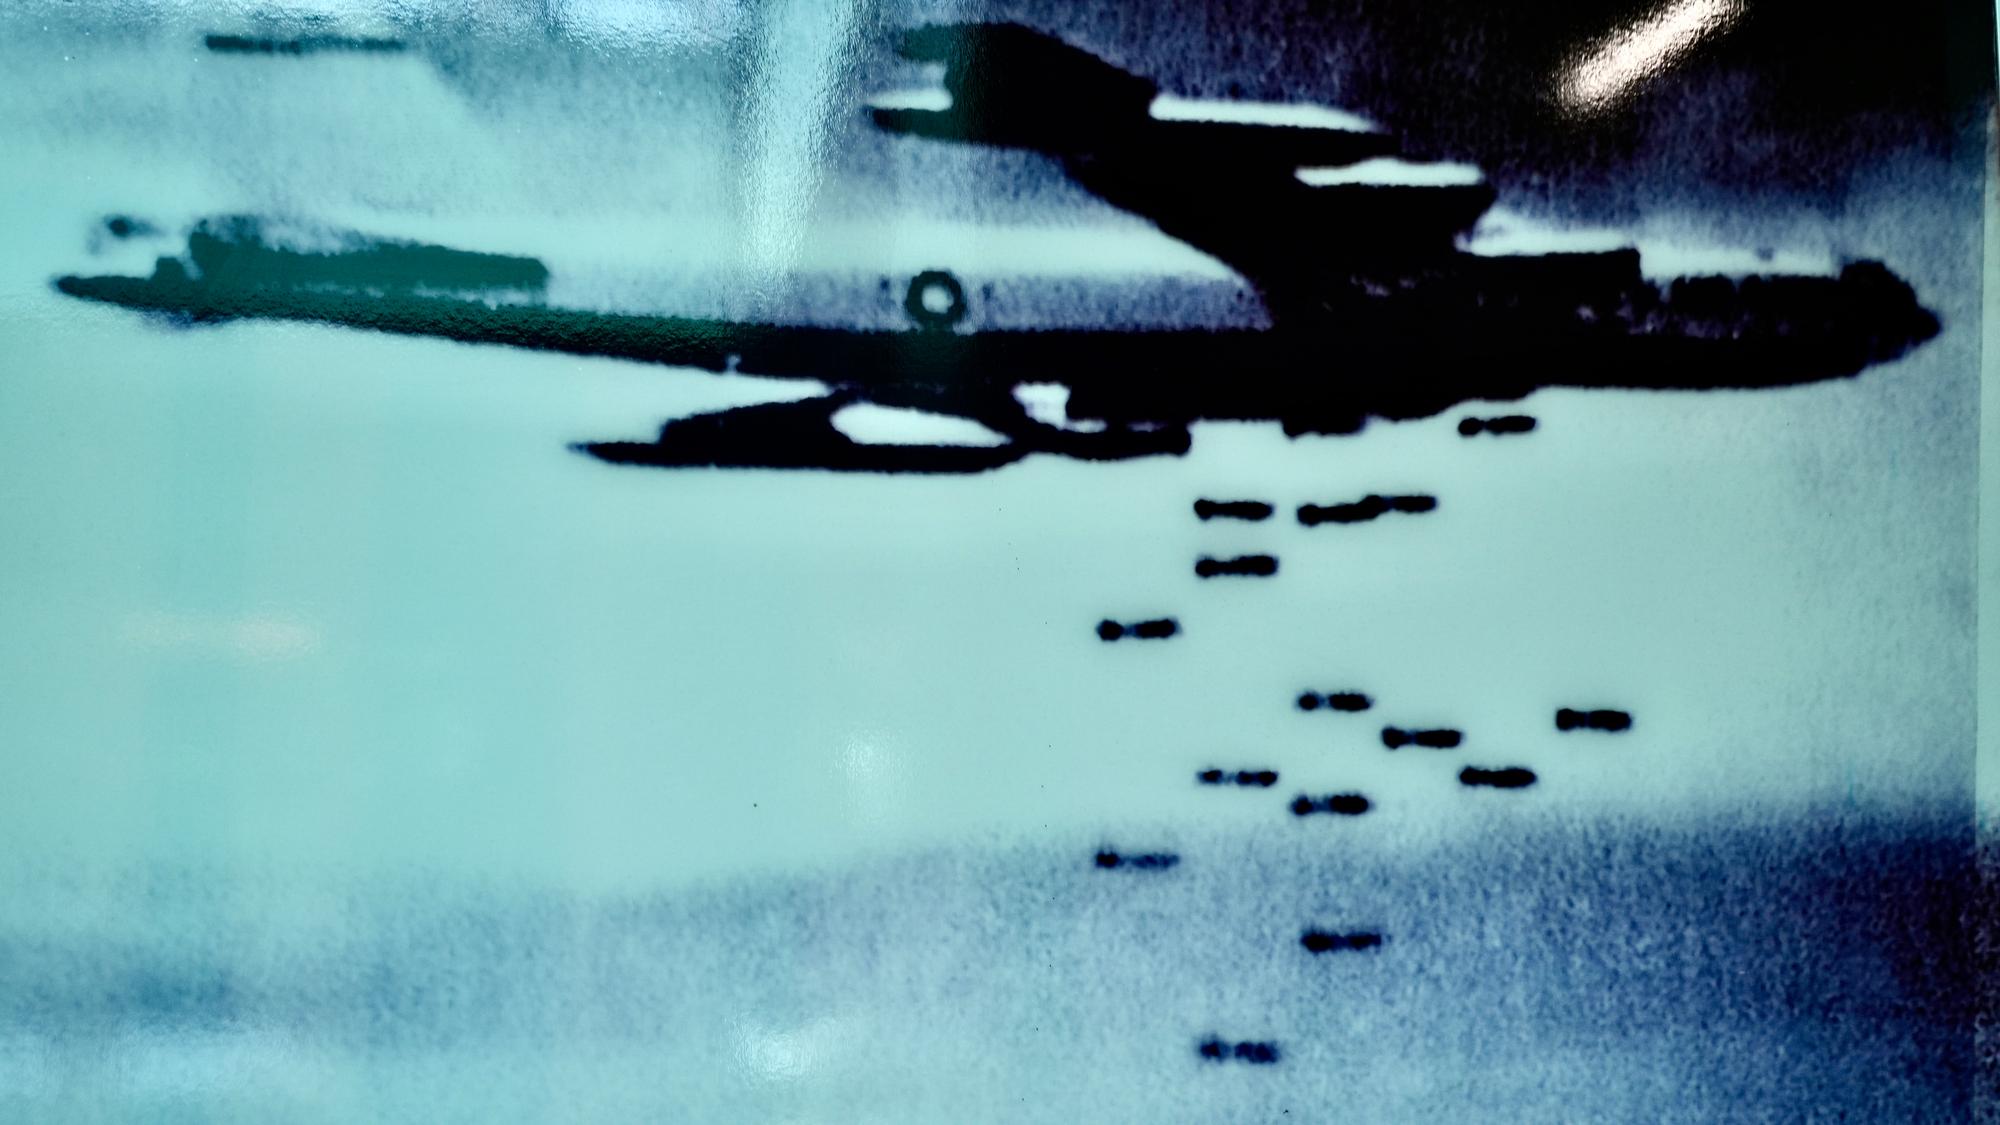 One of hundreds of B-52 bombing runs